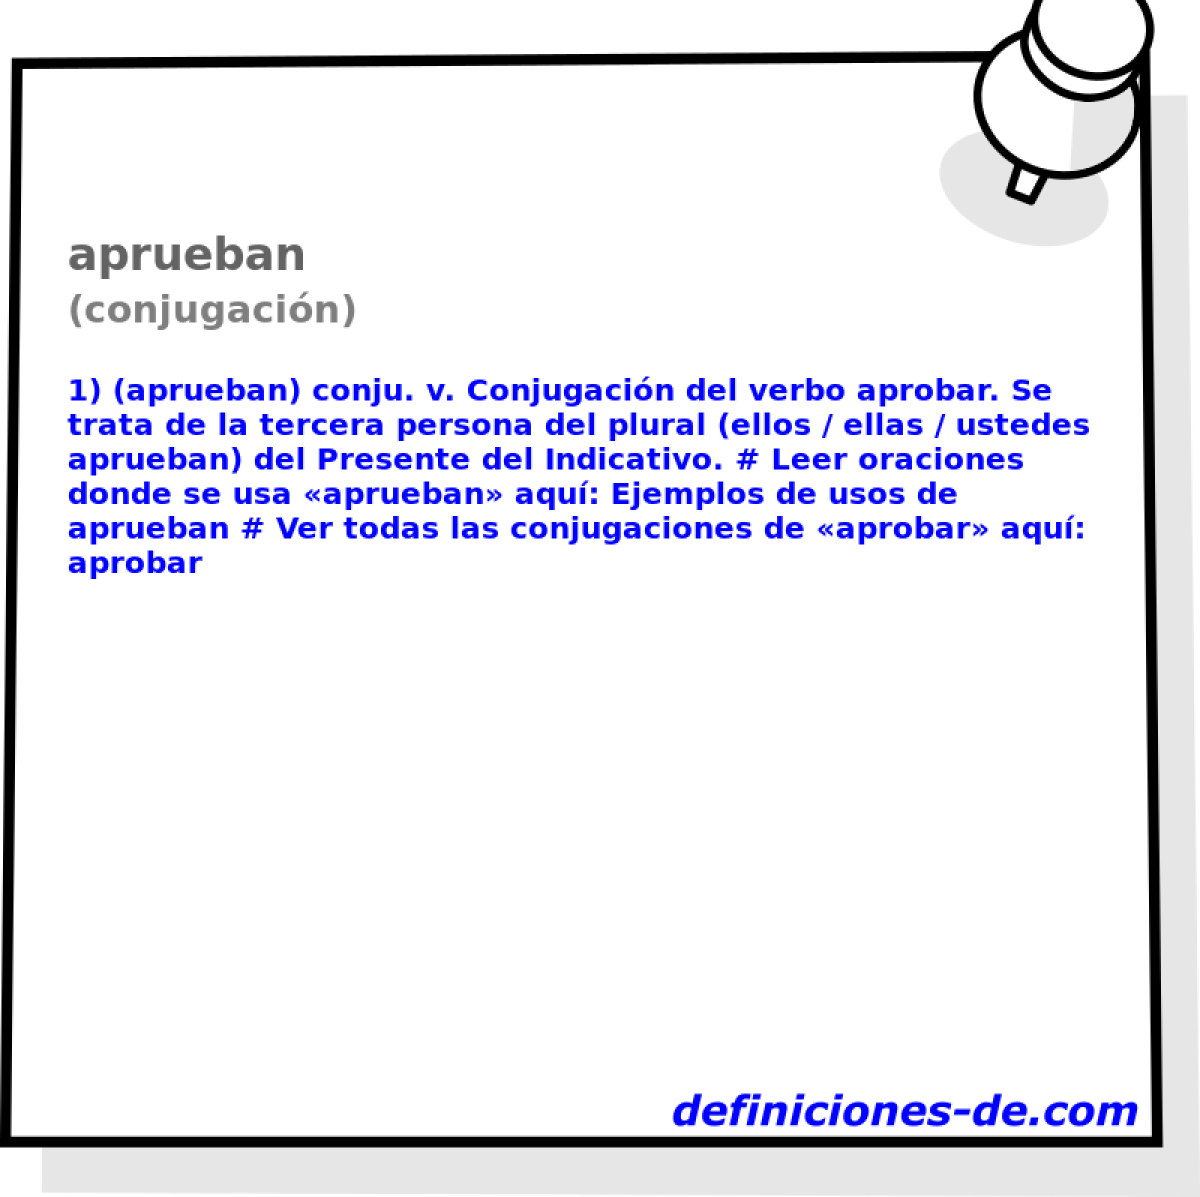 aprueban (conjugacin)